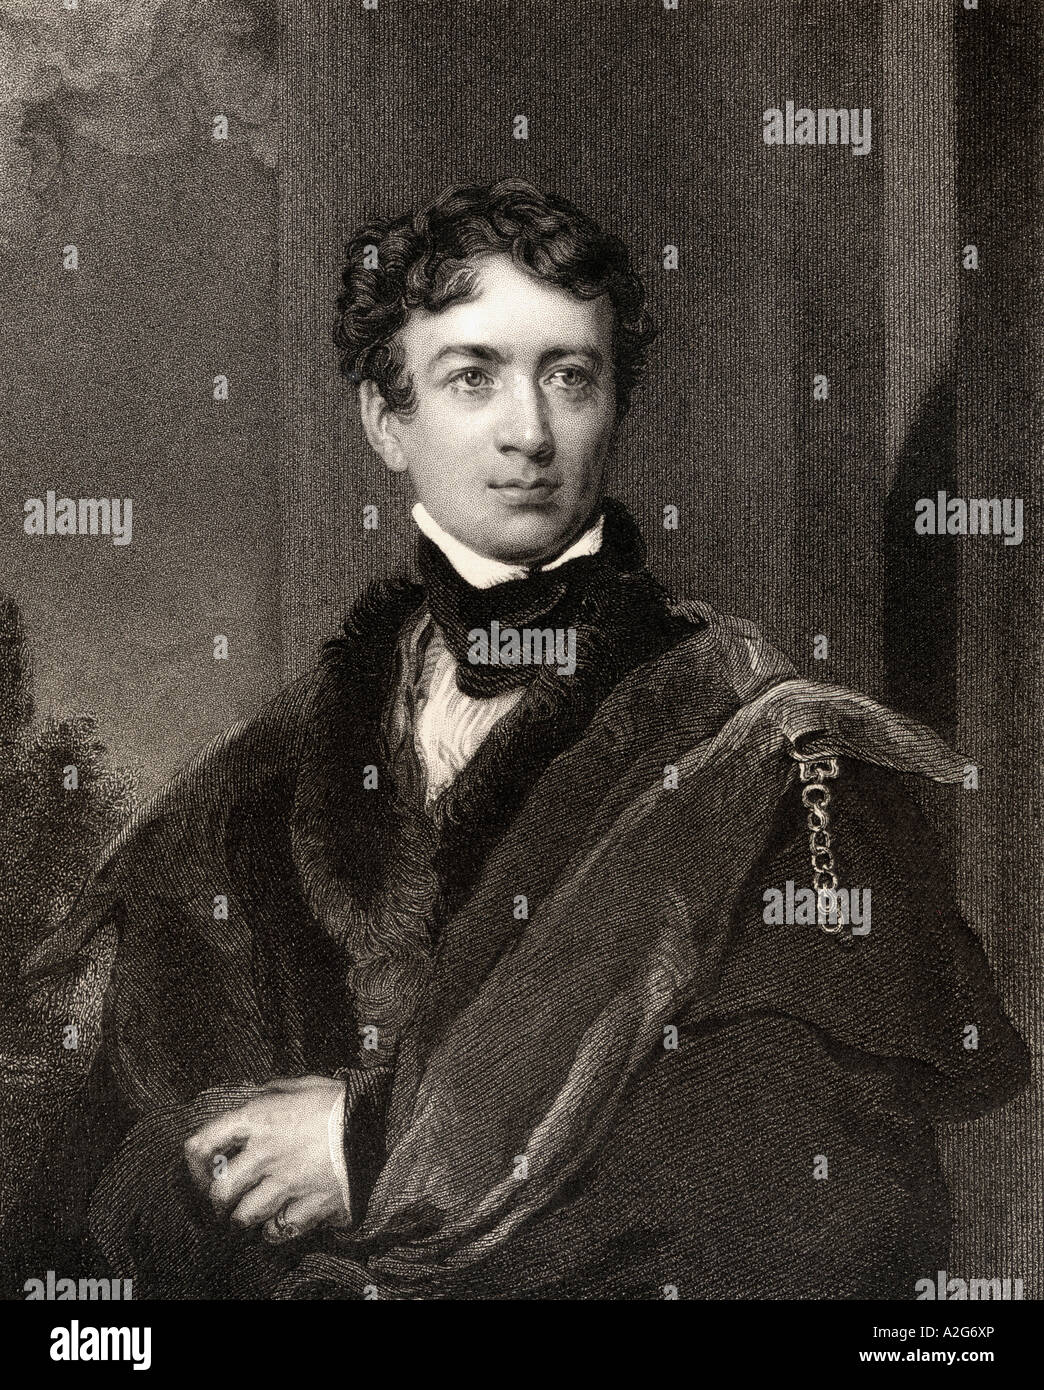 John George Lambton, 1st Earl of Durham, 1792 - 1840, aka Radical Jack. British Whig statesman and colonial adminstrator. Stock Photo